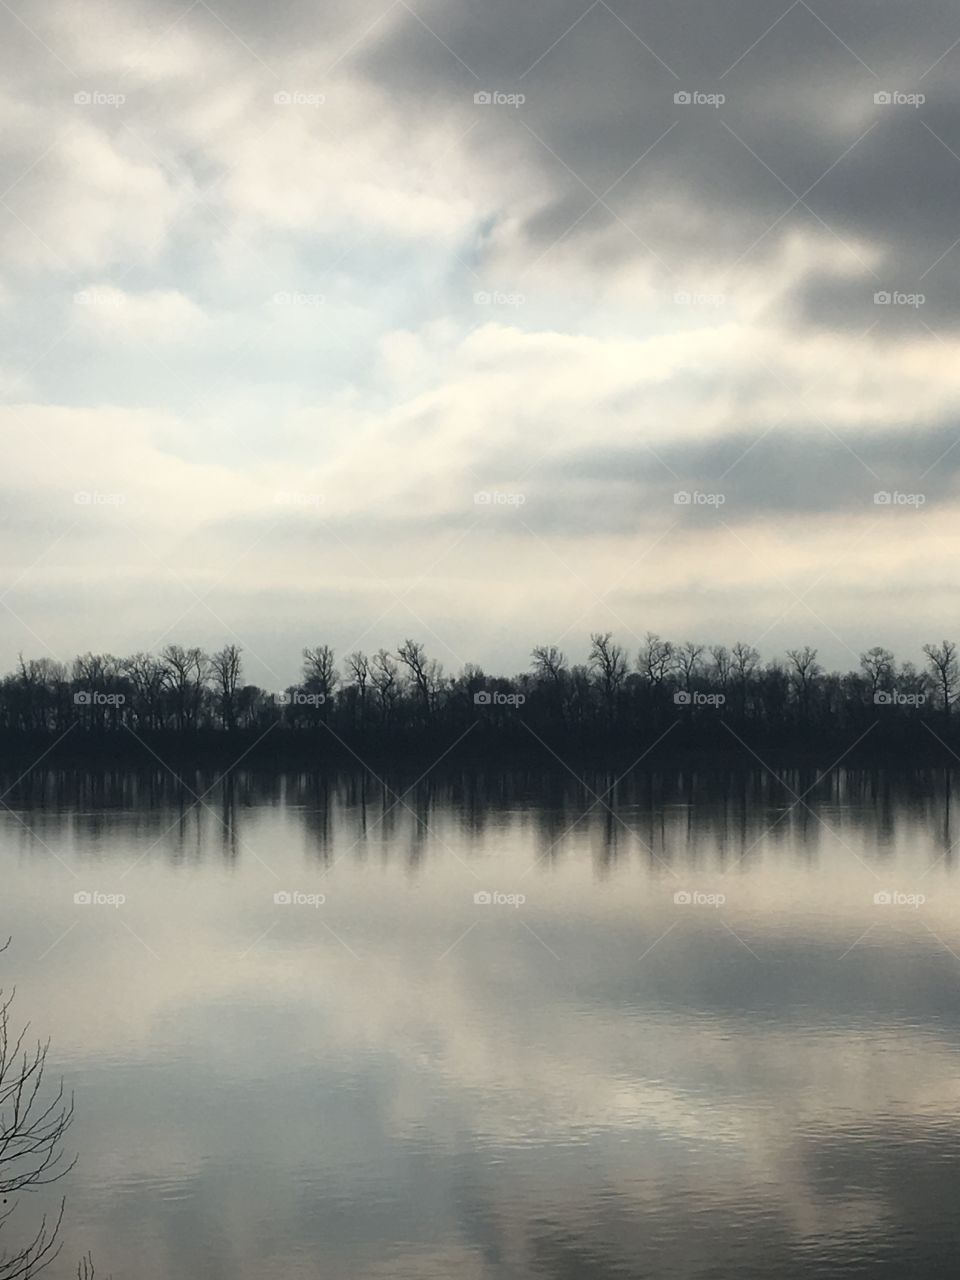 Ohio river